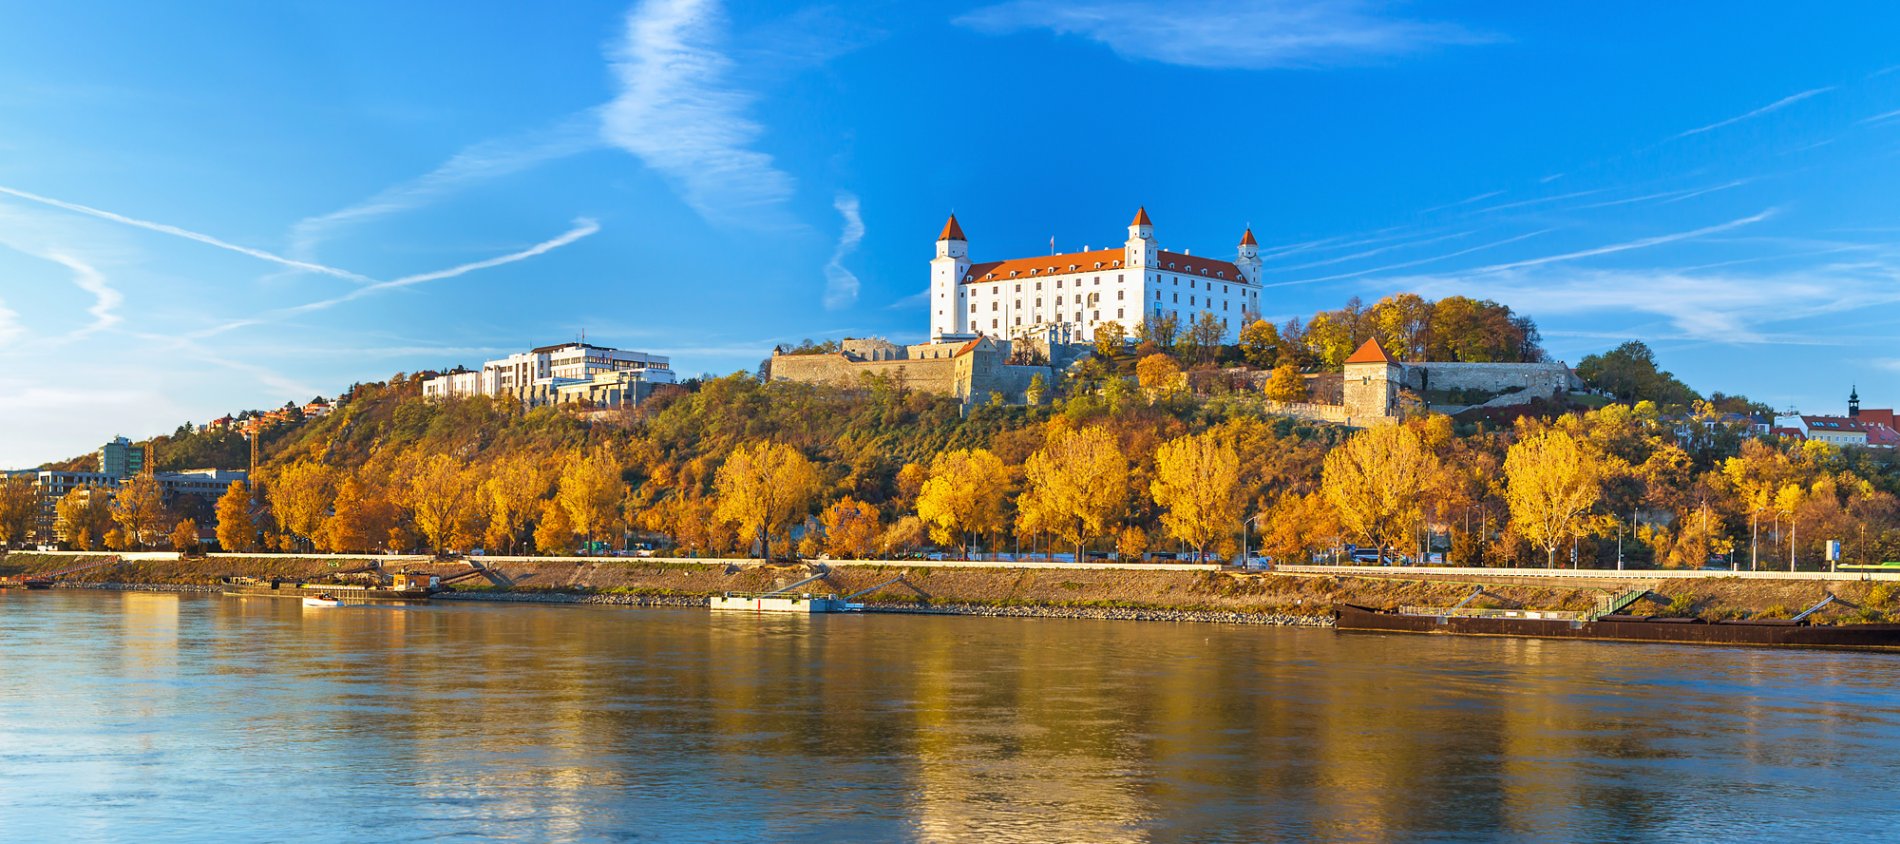 Danube River Cruises / Prague Tours